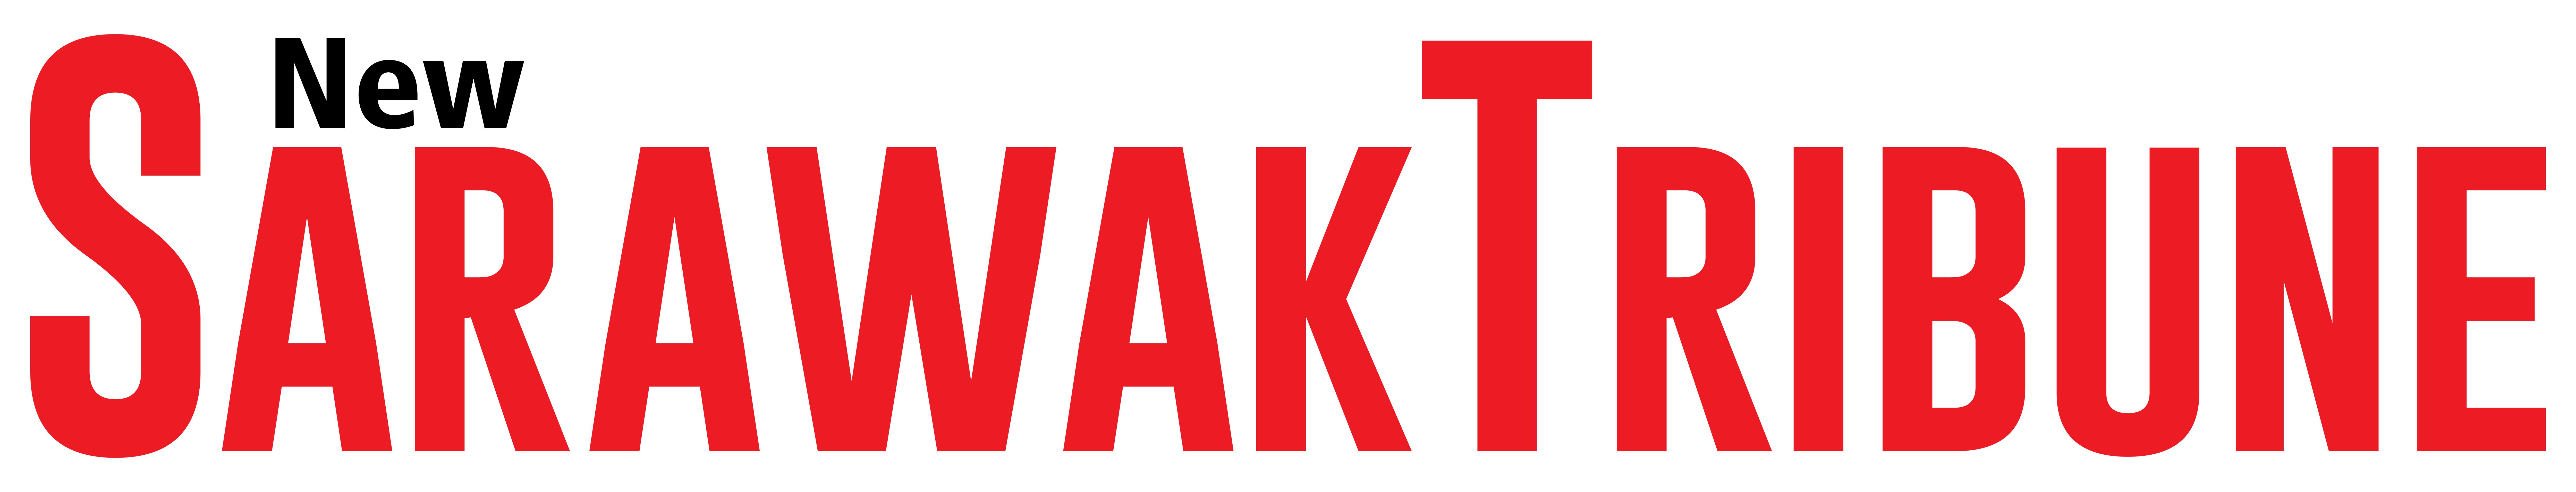 sarawak_tribune_newspaper_logo